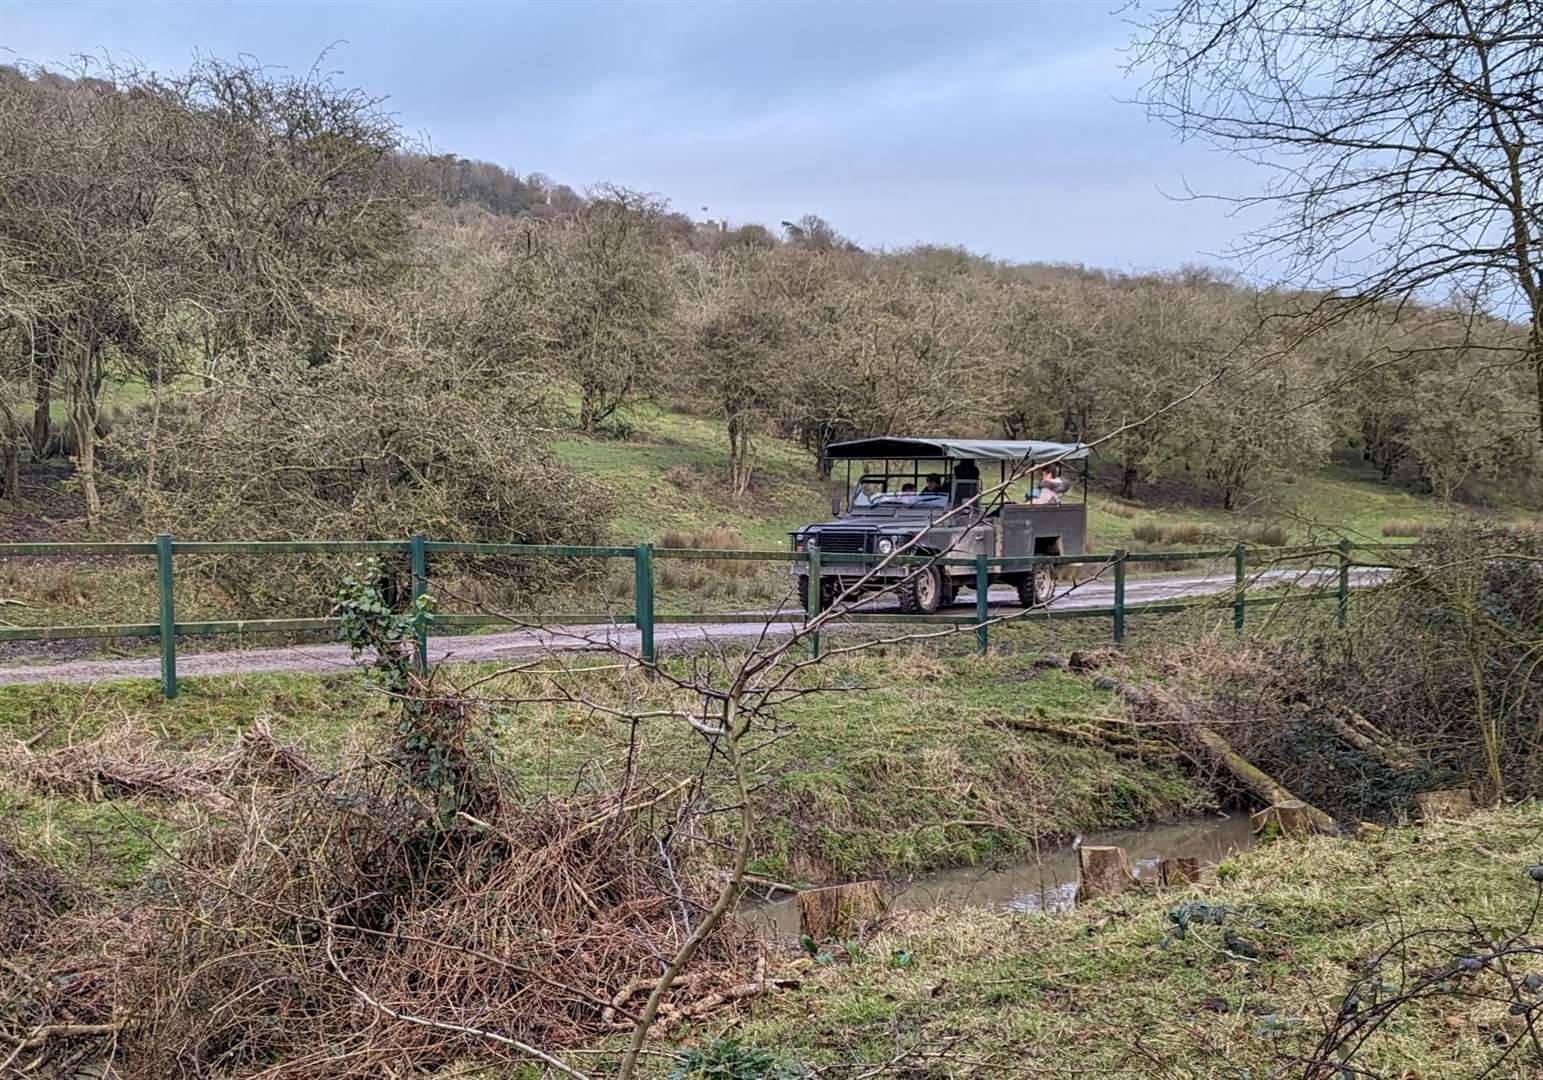 A safari jeep winds its way through Port Lympne Wild Animal Park